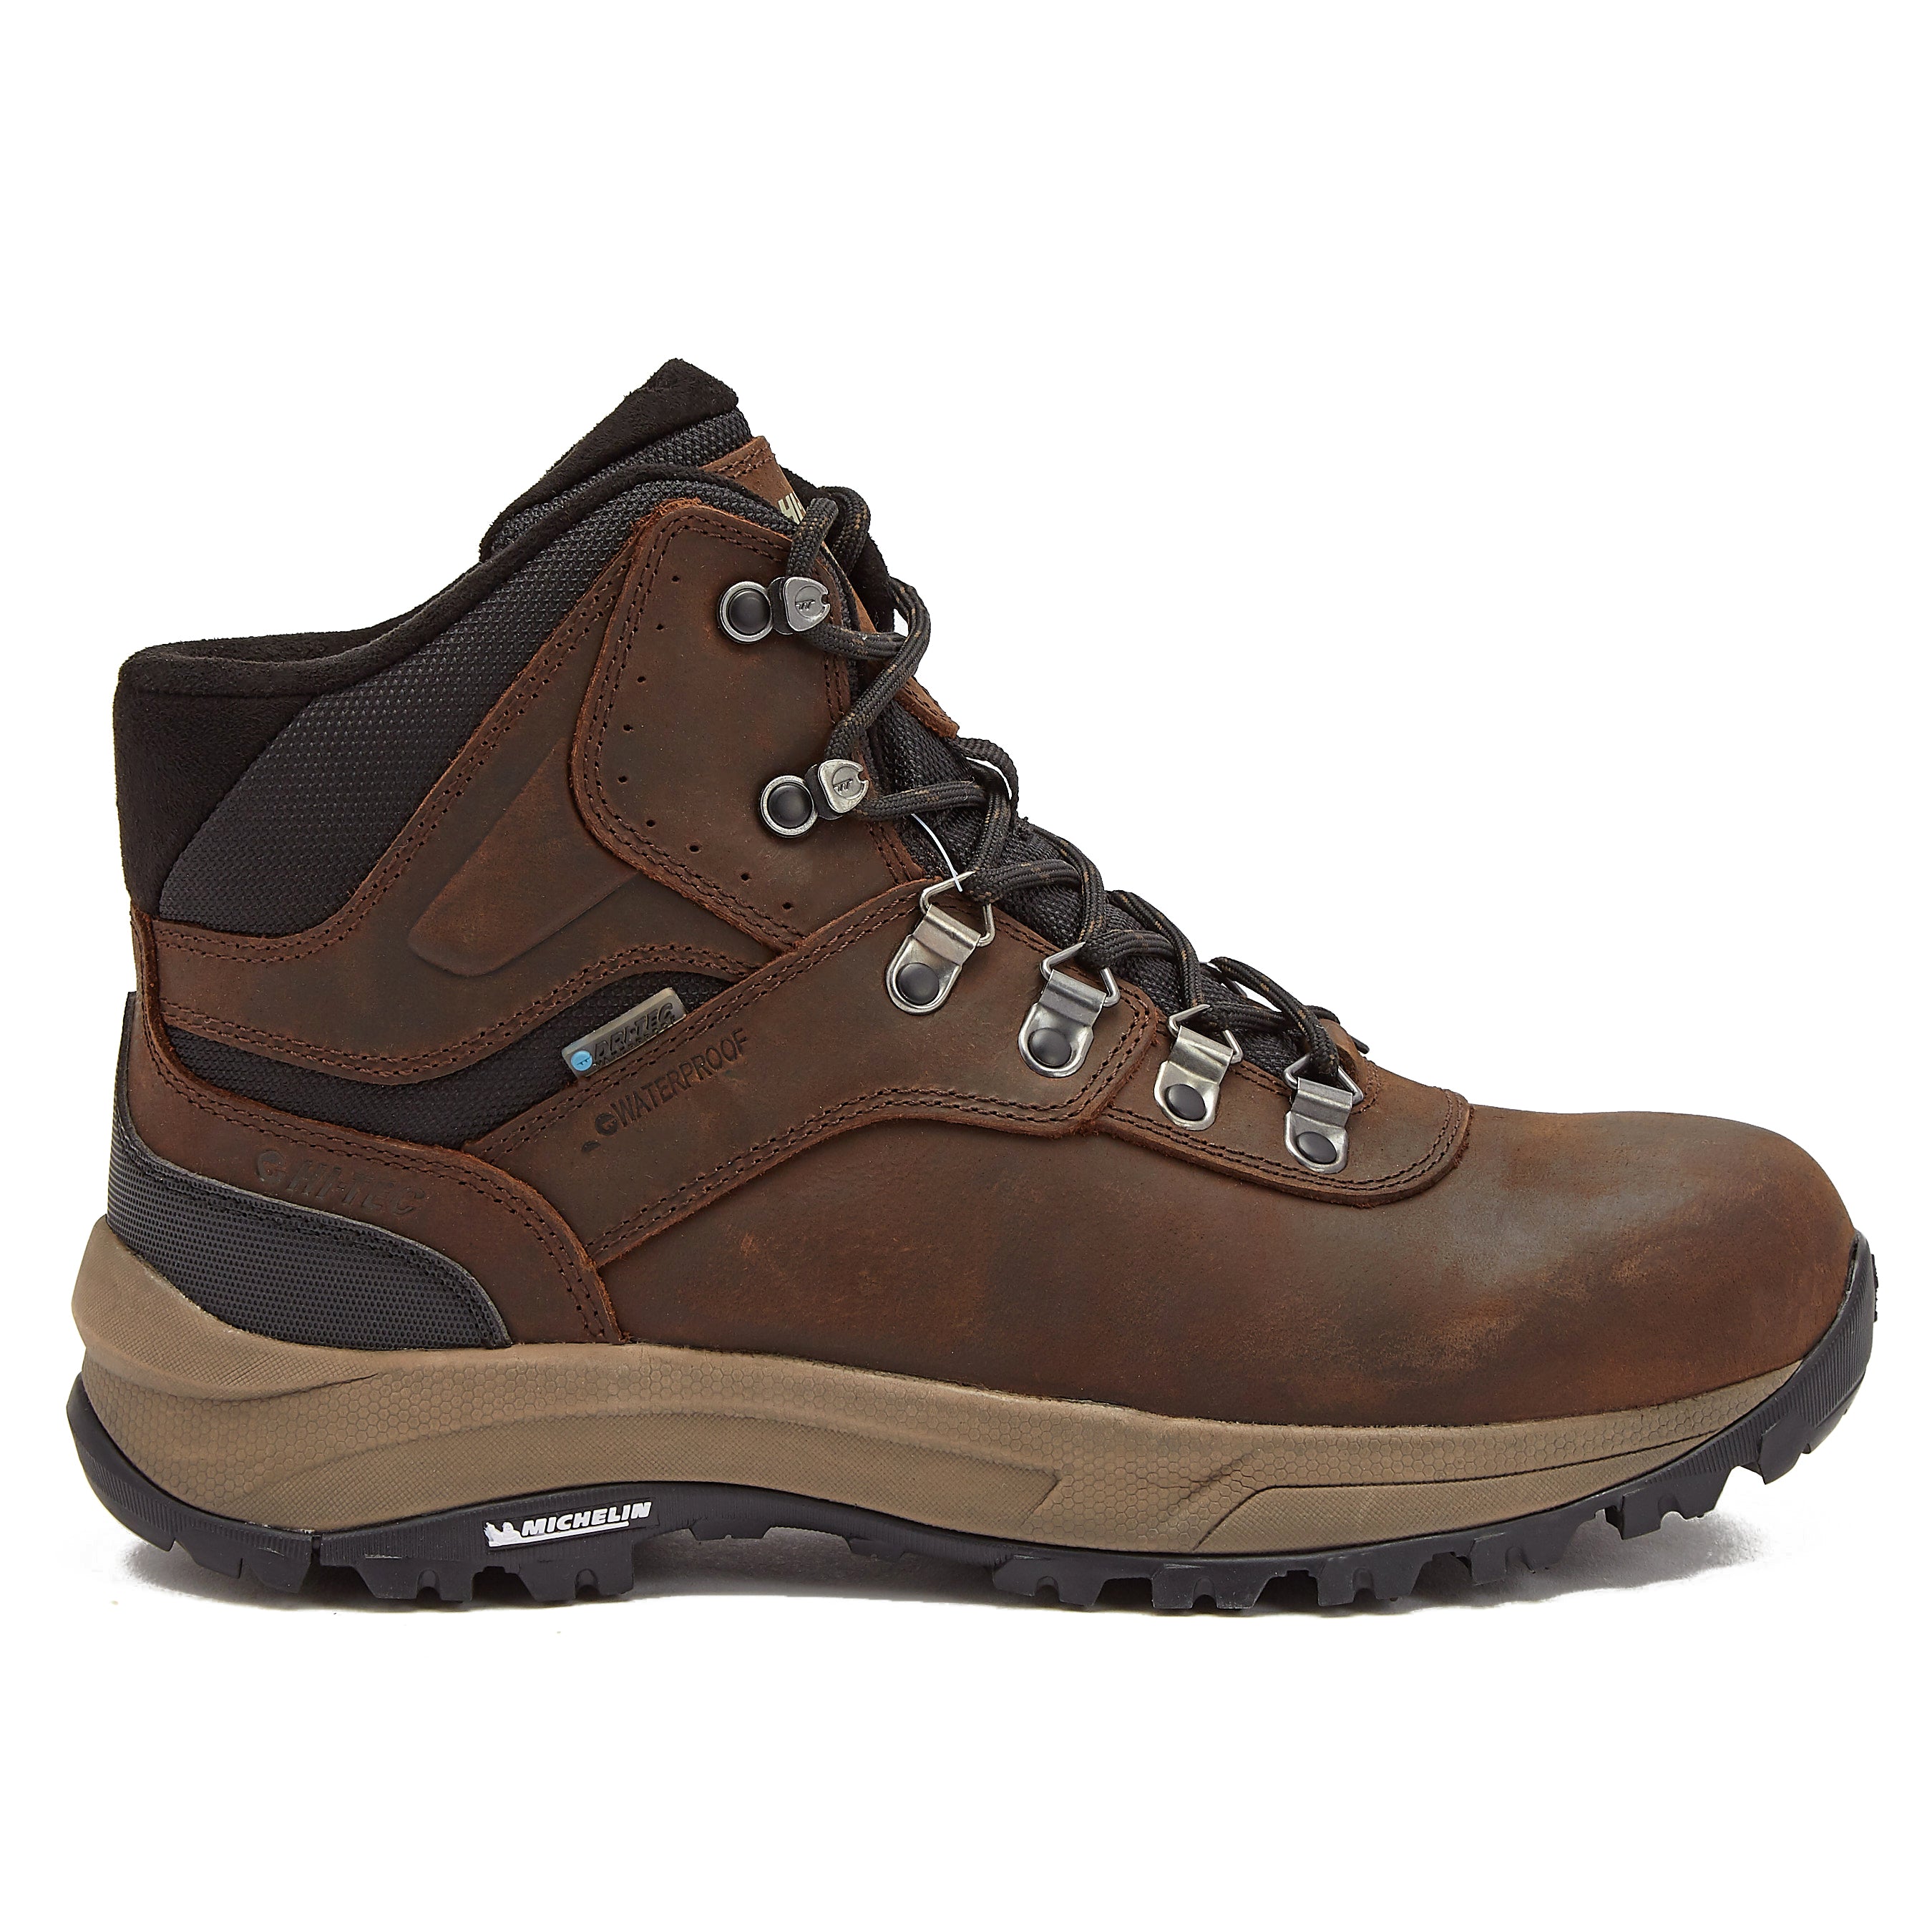 HI-TEC Altitude Waterproof Hiking Boots for Men